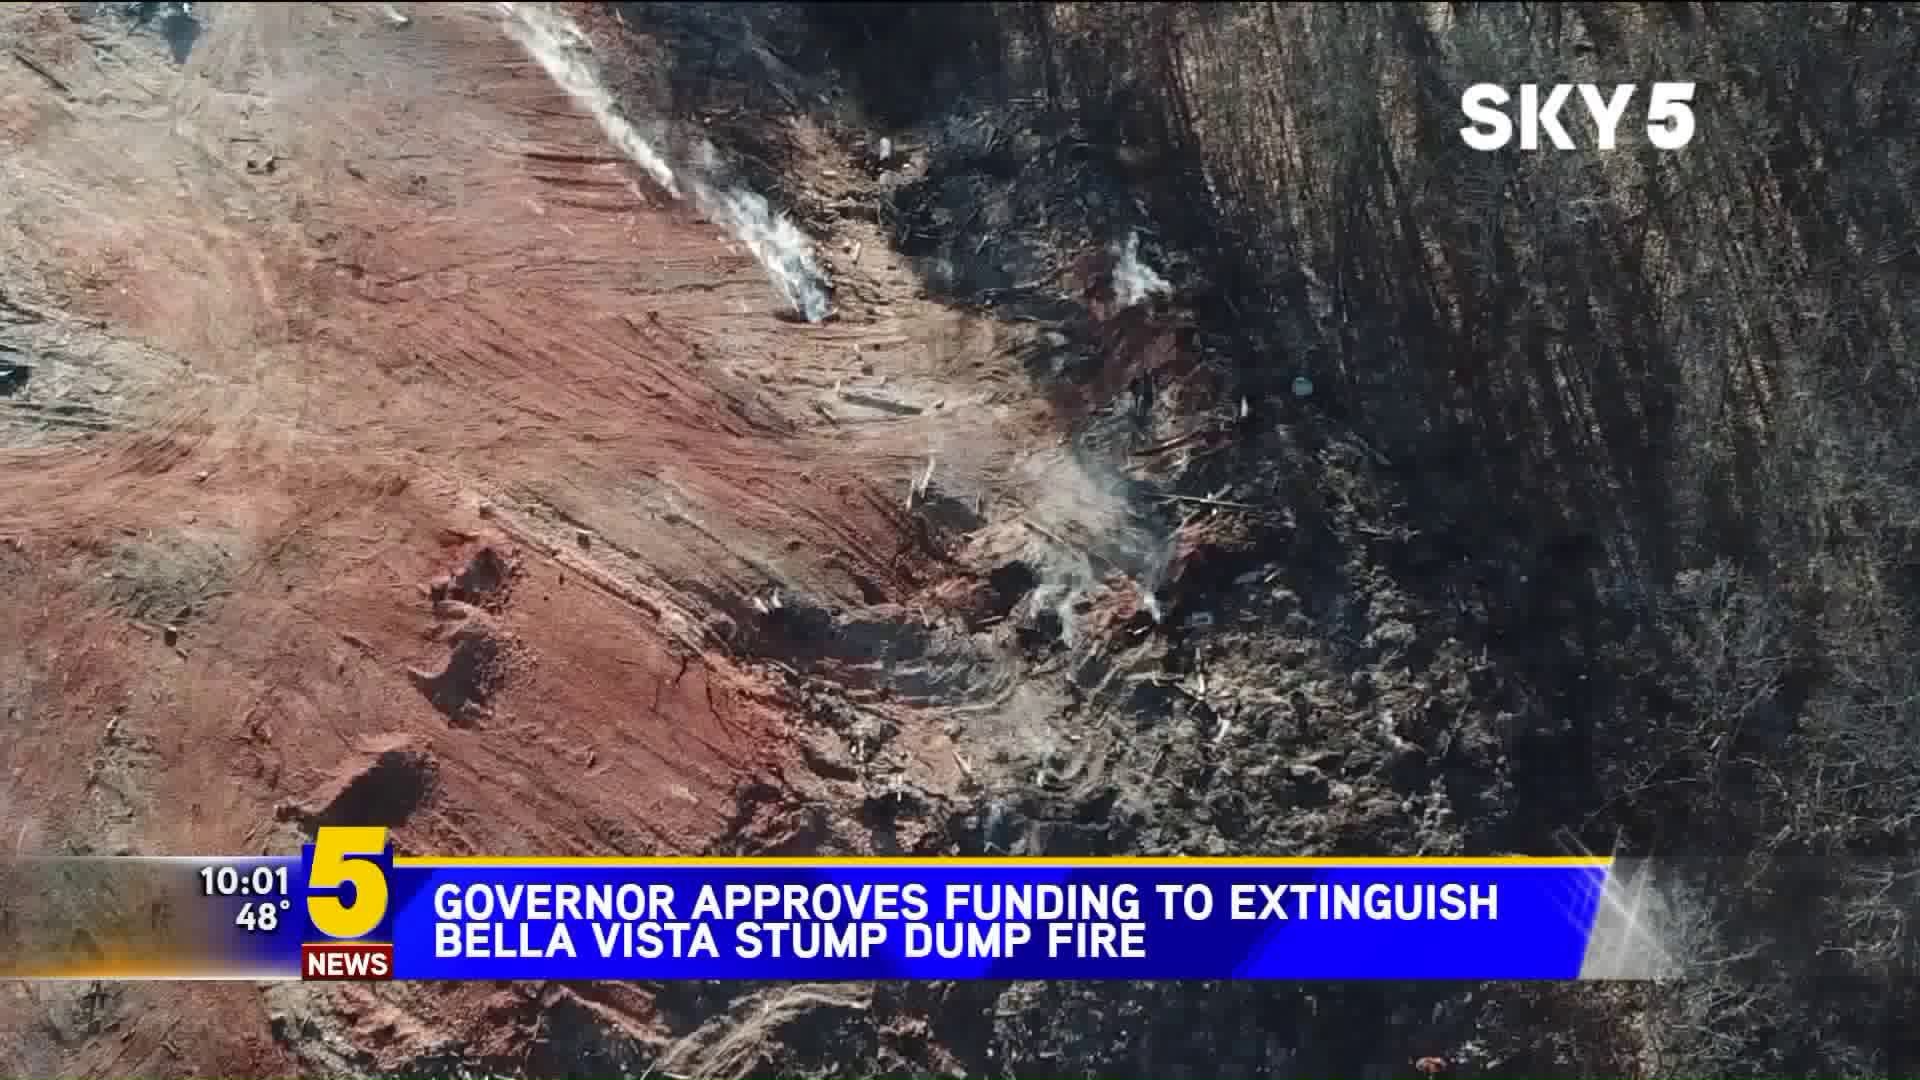 Governor Approves Funding to Extinguish Bella Vista Stump Dump Fire